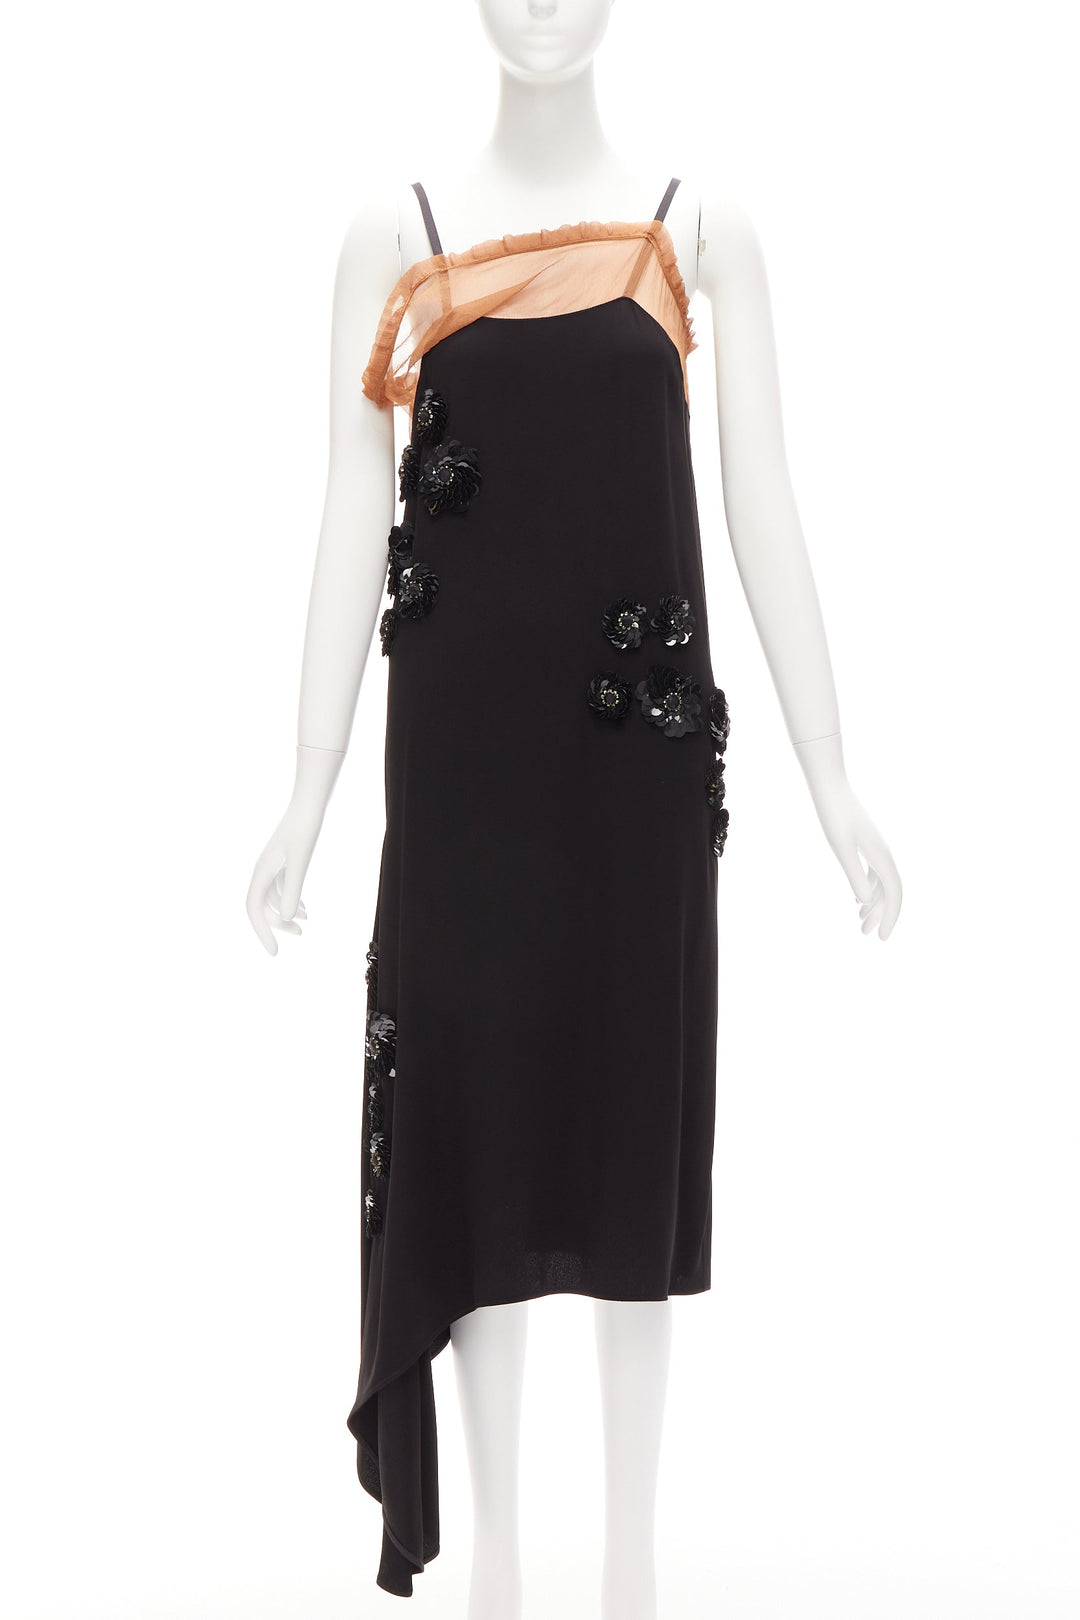 MARNI black floral sequins embellishment nude ruffle slip dress IT38 XS